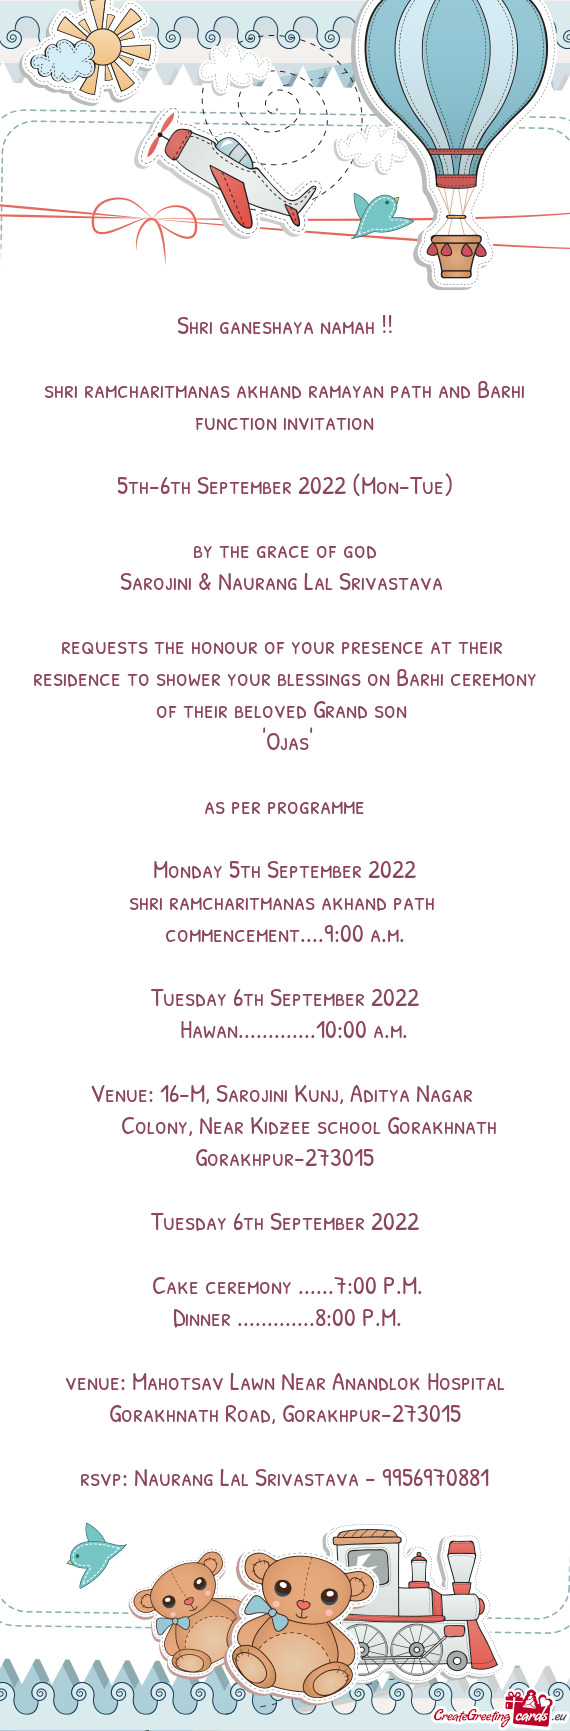 Shri ramcharitmanas akhand ramayan path and Barhi function invitation